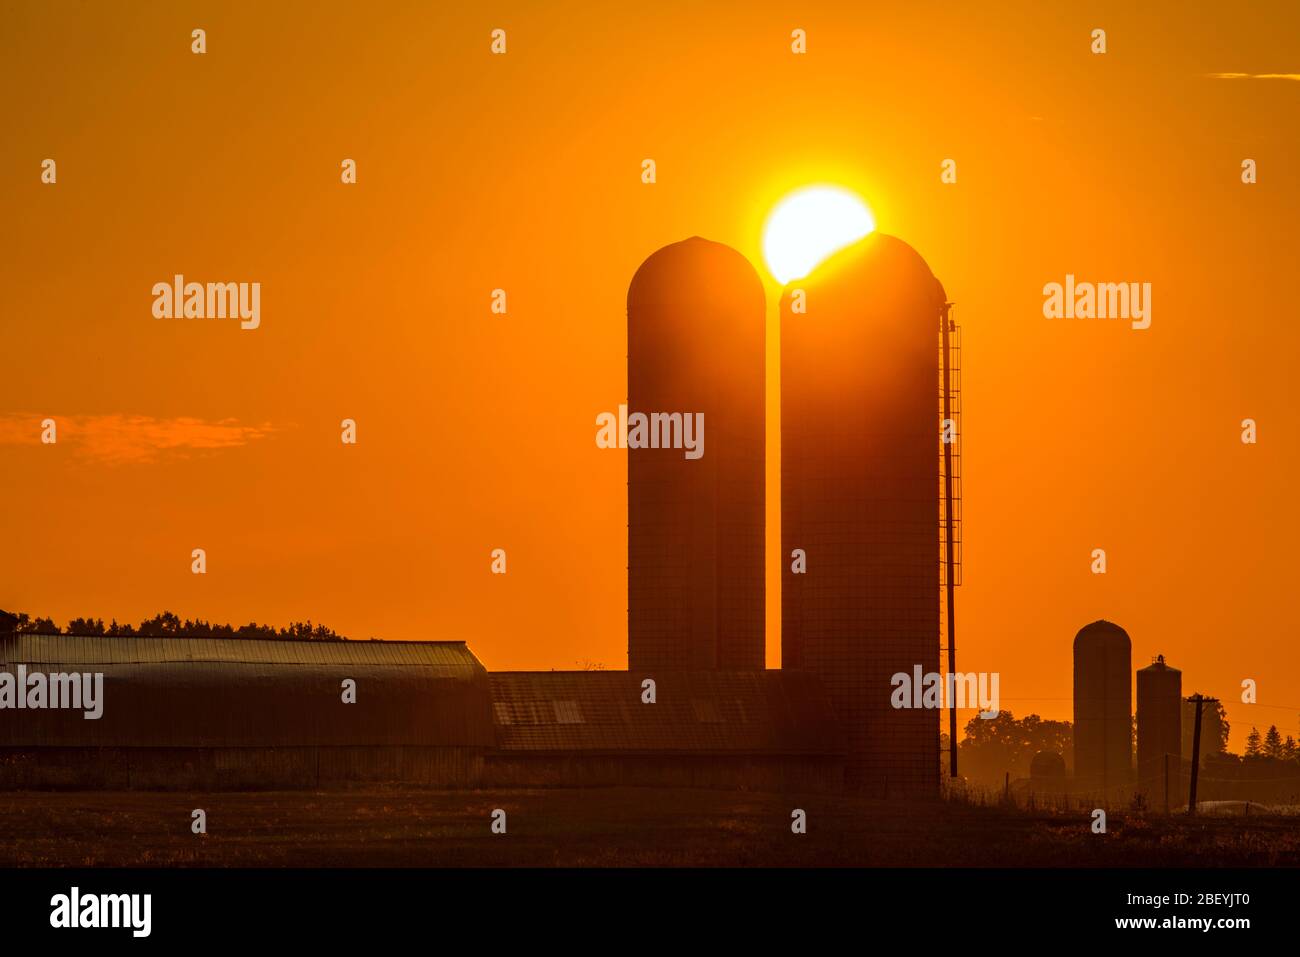 Farm buildings with silos at sunrise, Wonderland Road, near London, Ontario, Canada Stock Photo